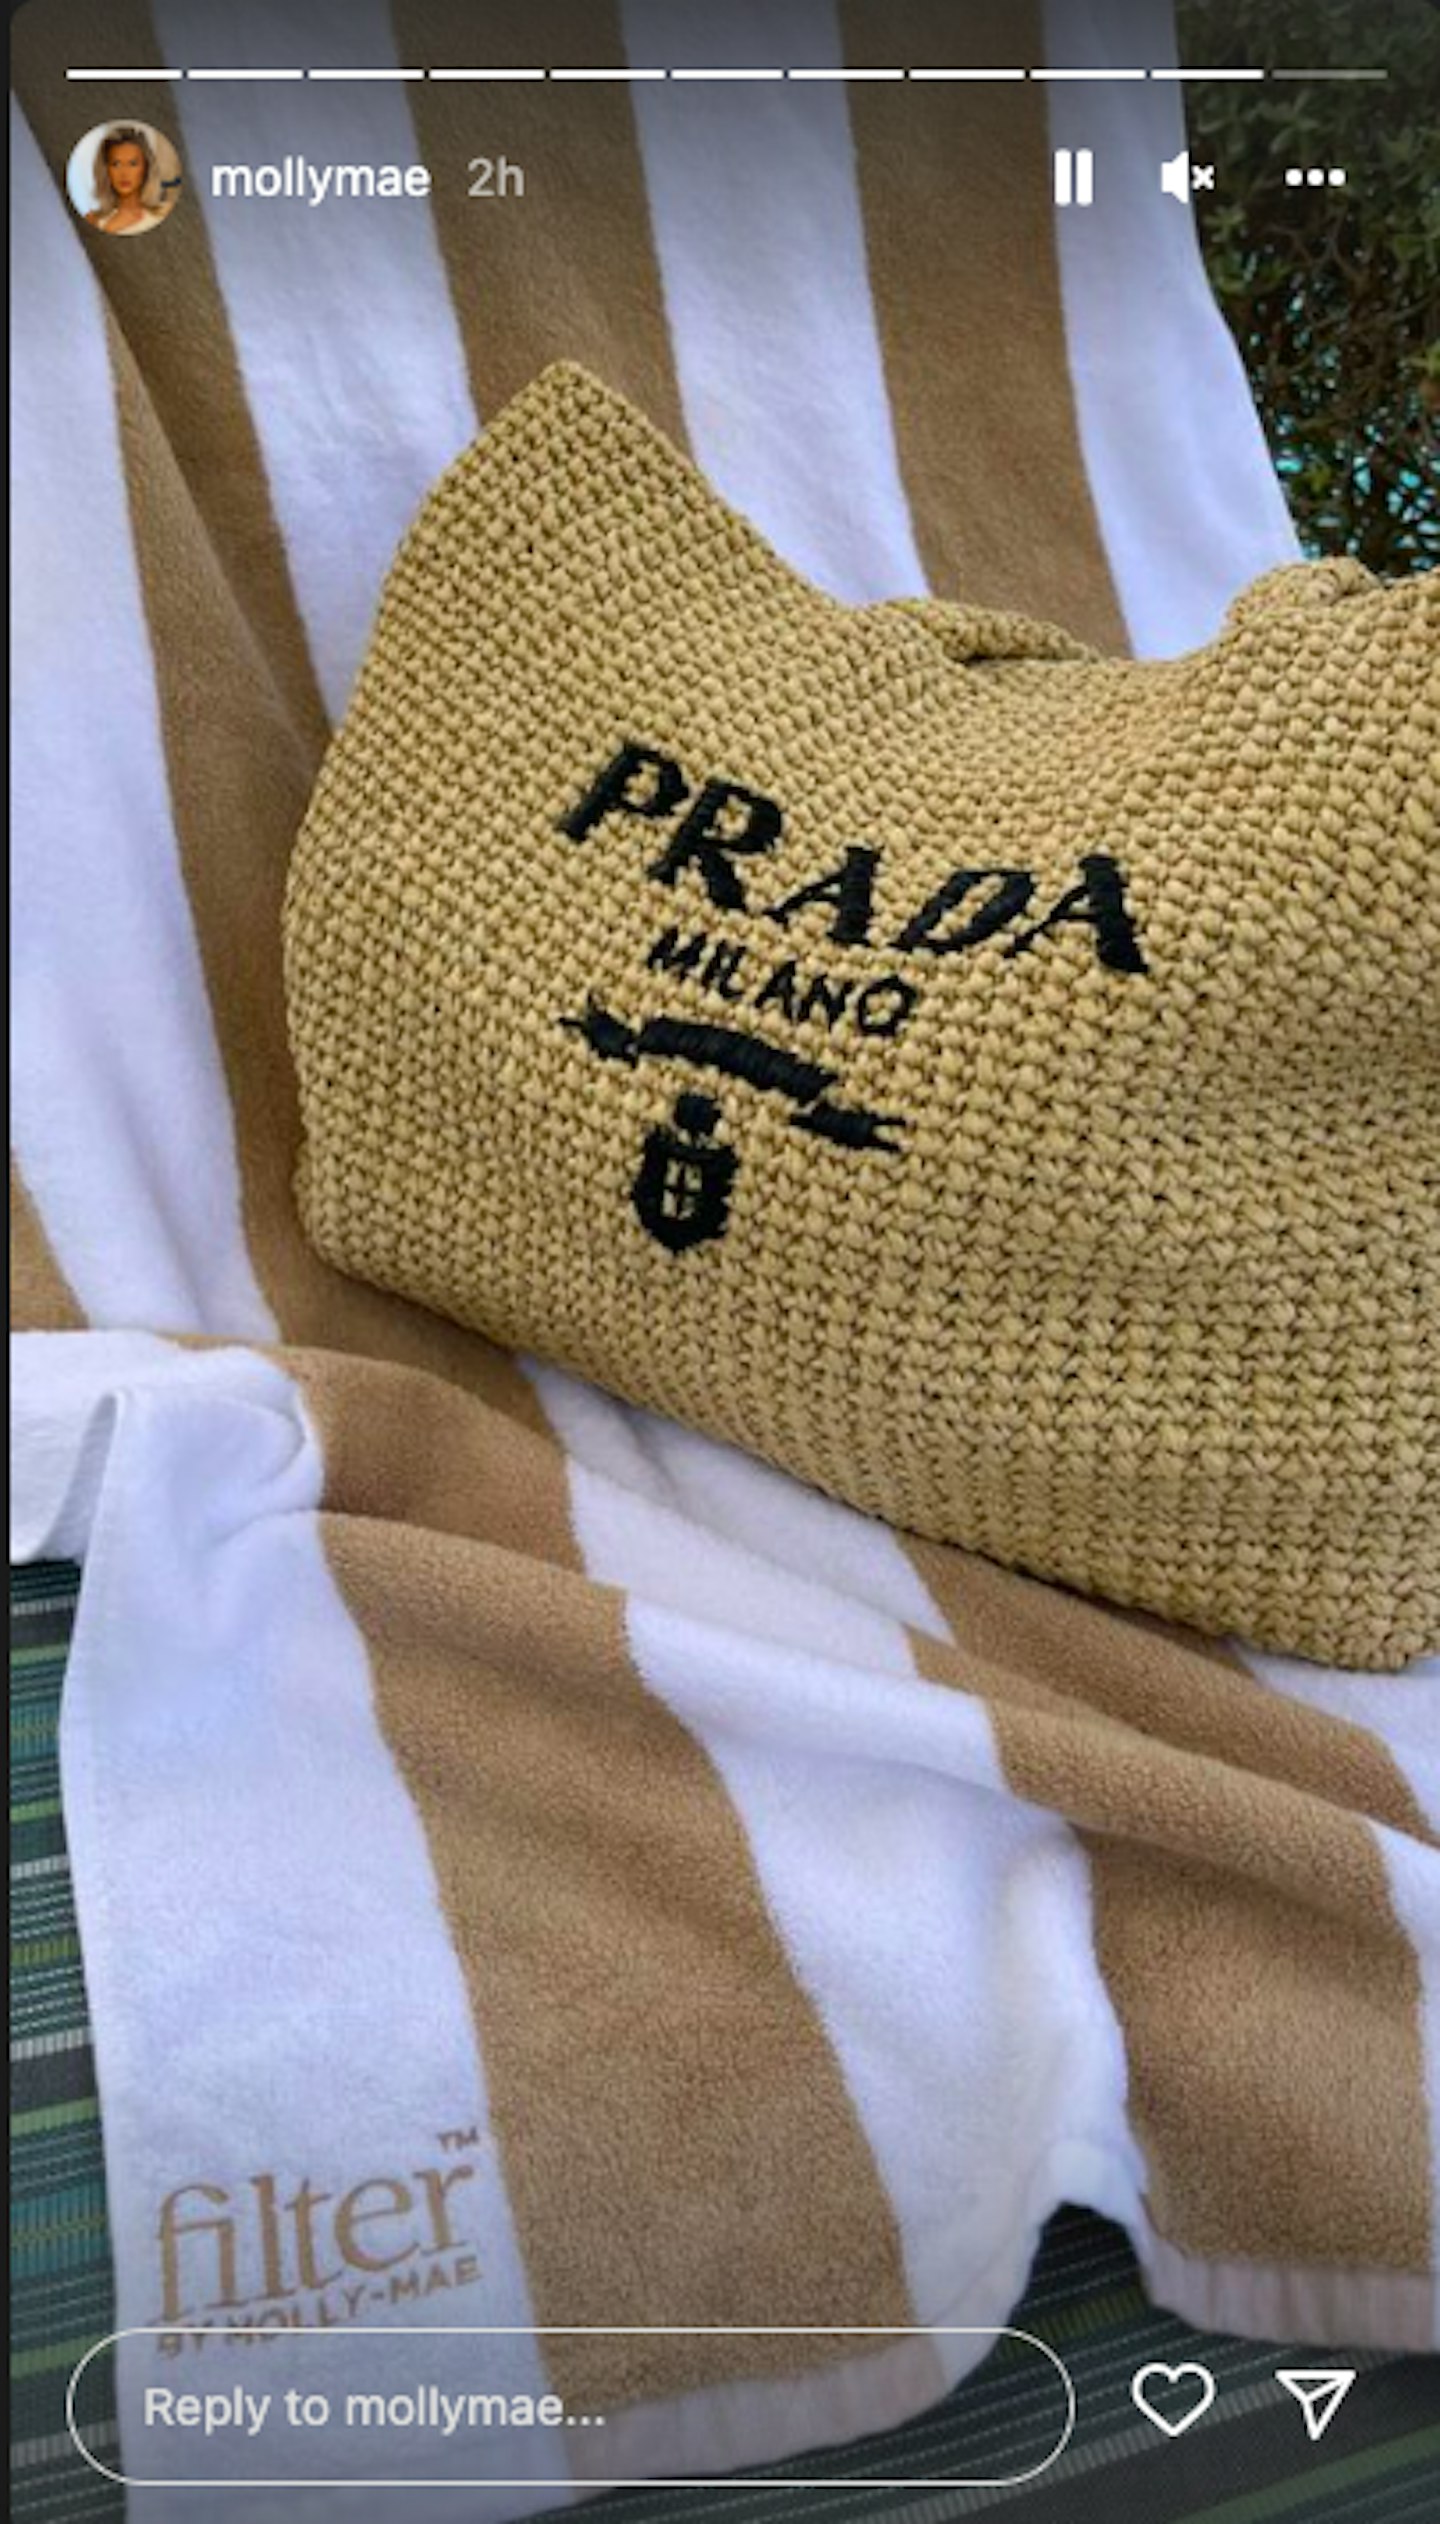 Prada Raffia Tote Bag - Authentic with tag, preloved.